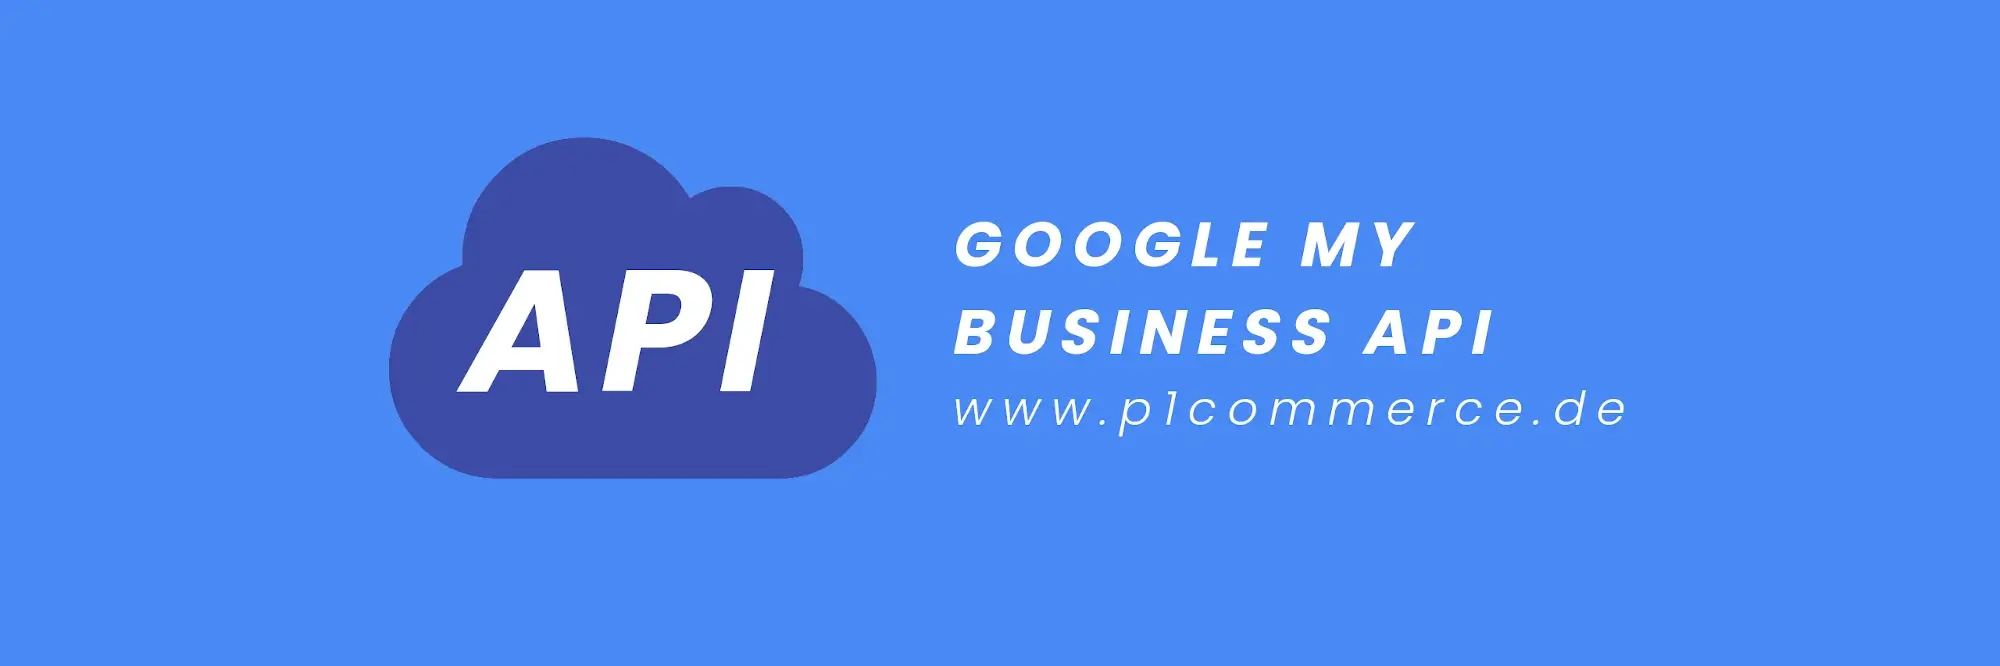 google my business api p1 commerce